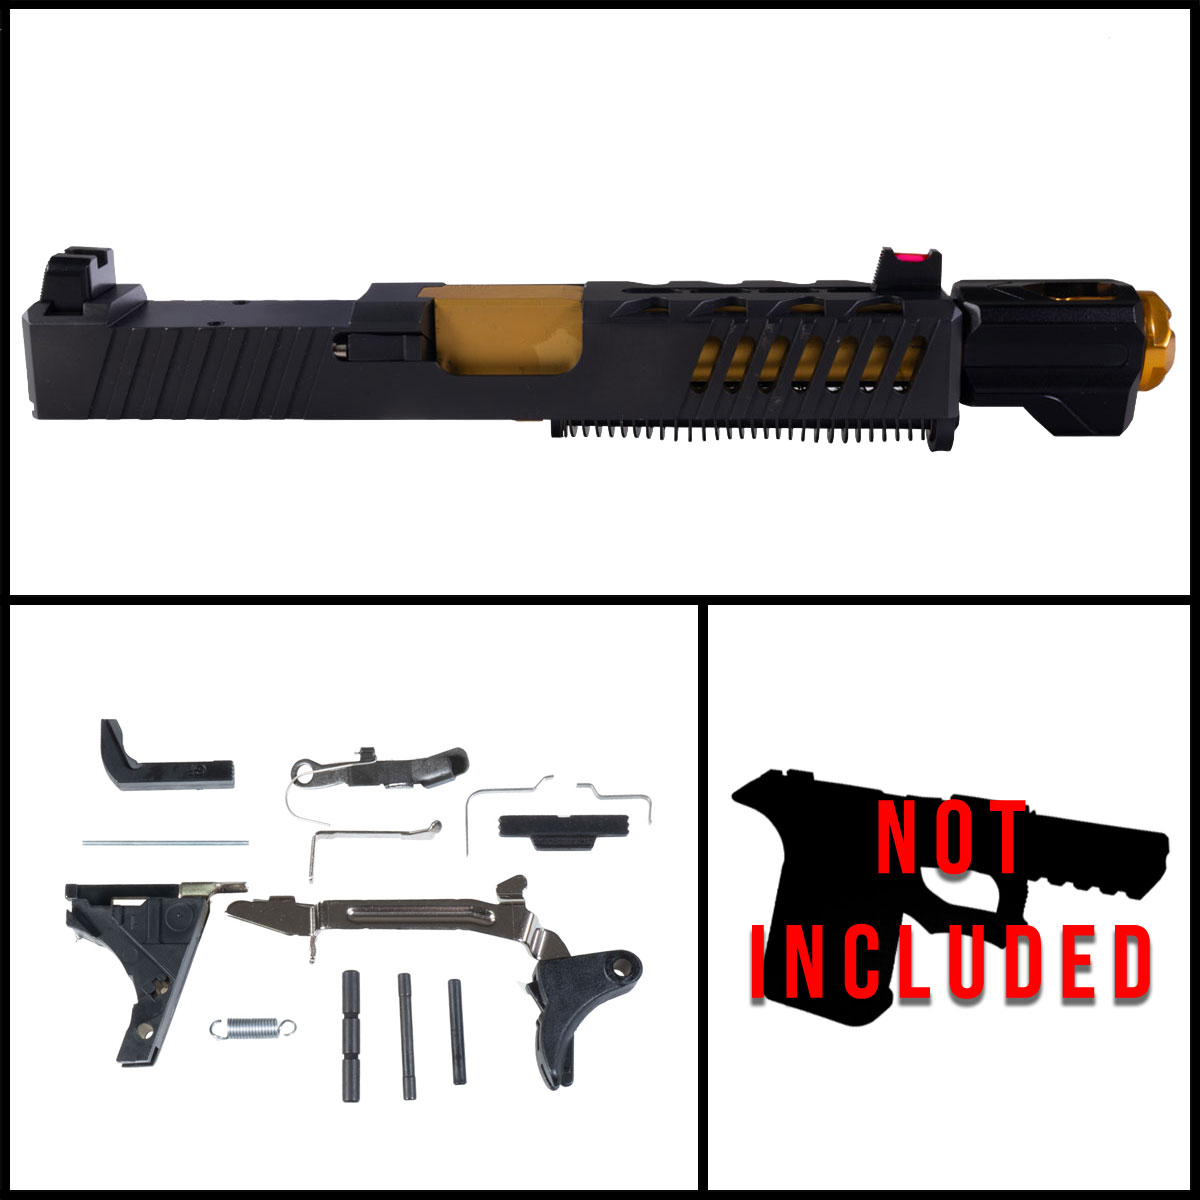 DDS 'Pow w/ Tyrant Designs Compensator' 9mm Full Pistol Build Kit (Everything Minus Frame) - Glock 19 Gen 1-3 Compatible